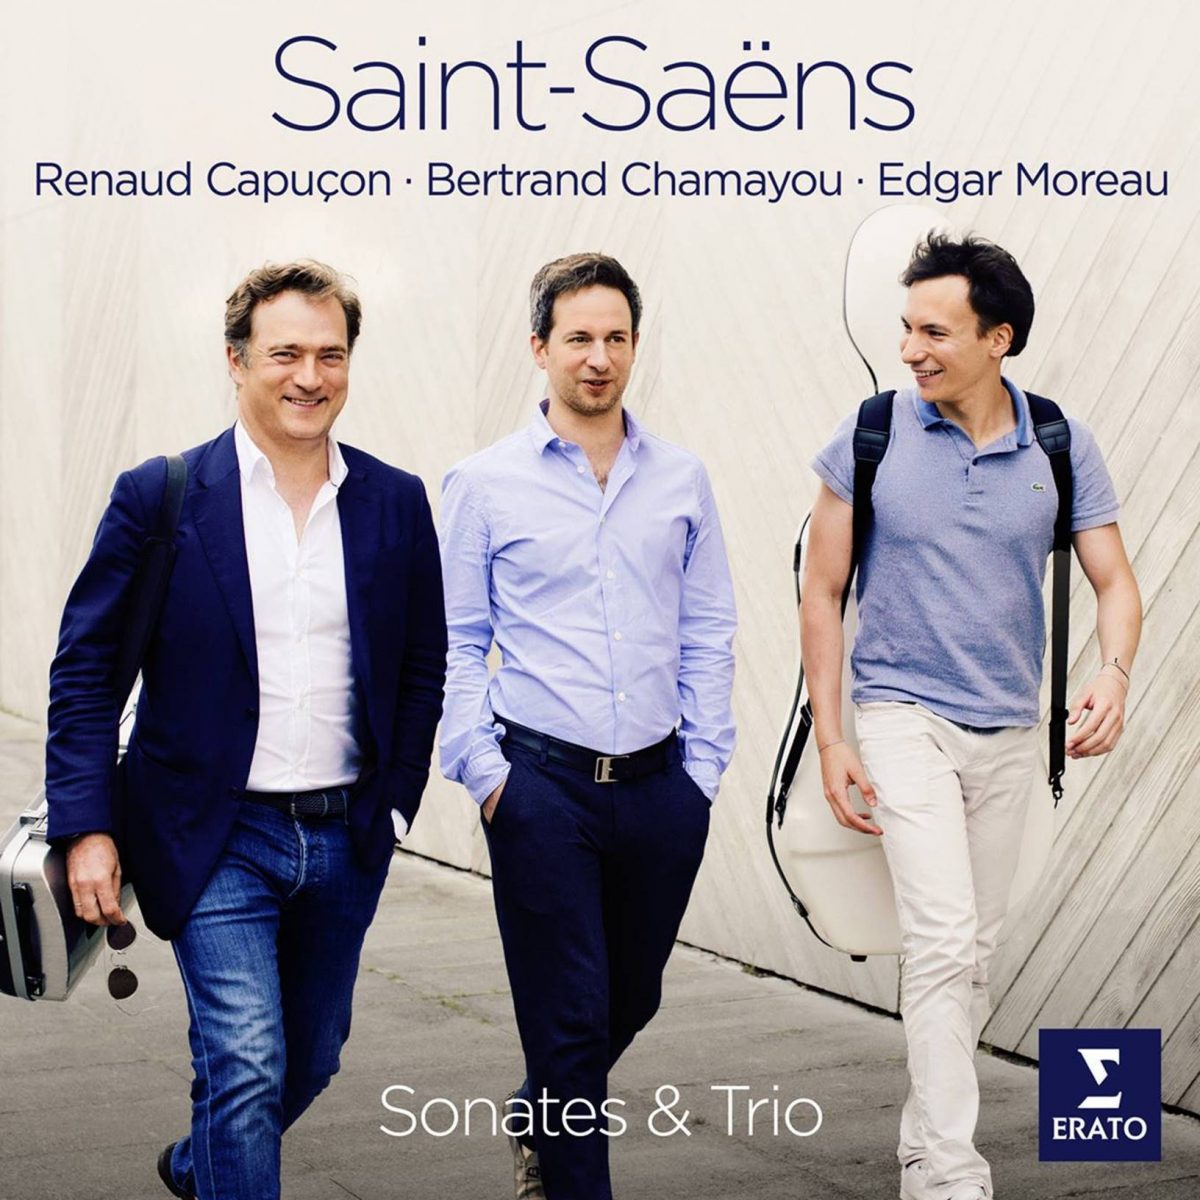 22 - Renaud Capuçon, Bertrand Chamayou, Edgar Moreau - Saint-Saëns: Sonates & Trio